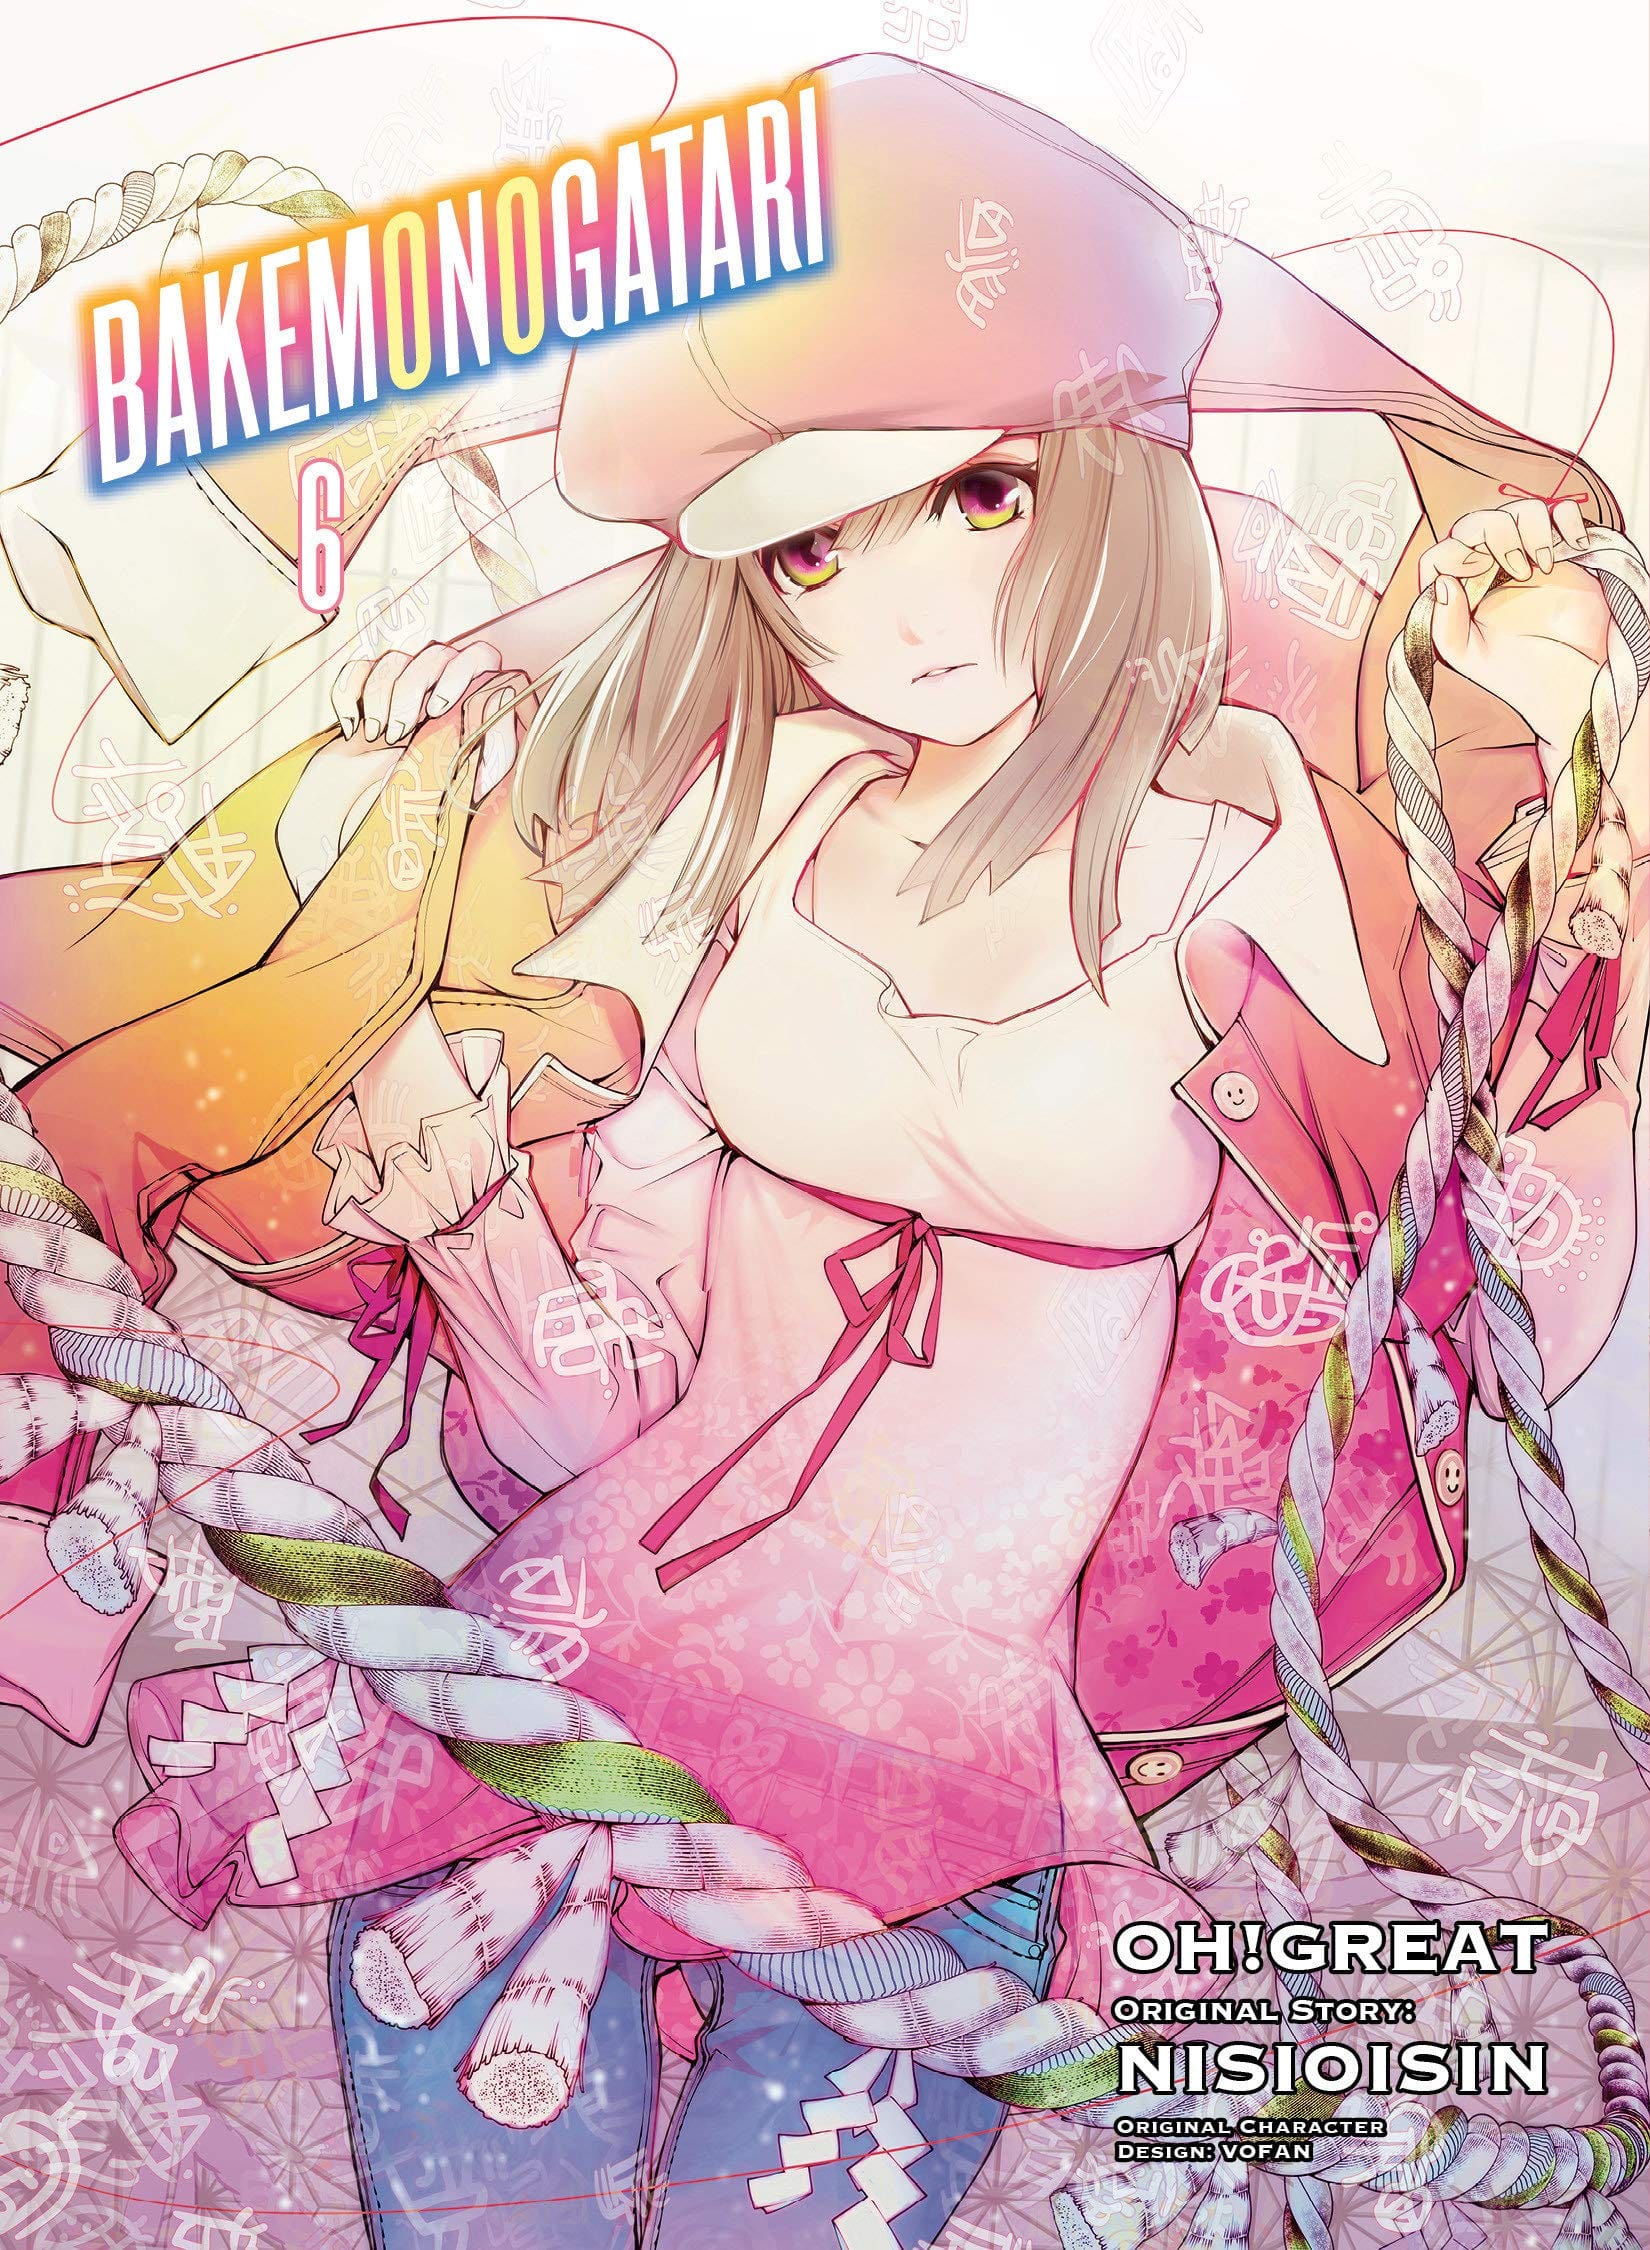 Bakemonogatari Vol. 6 - Third Eye